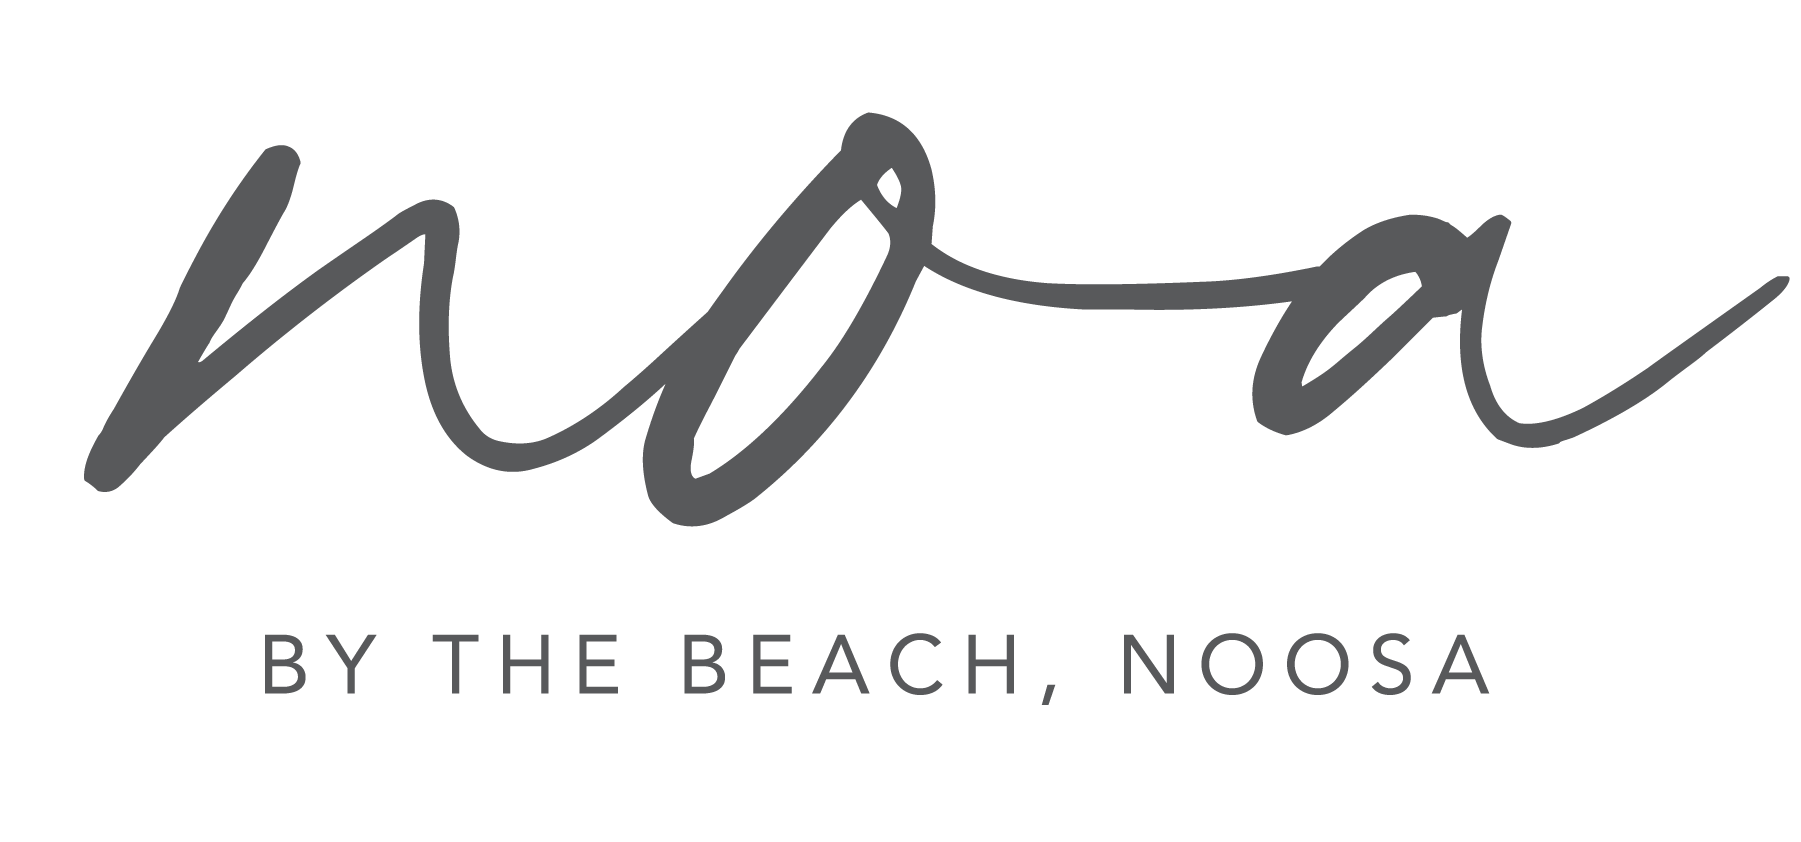 Noa By the Beach Noosa